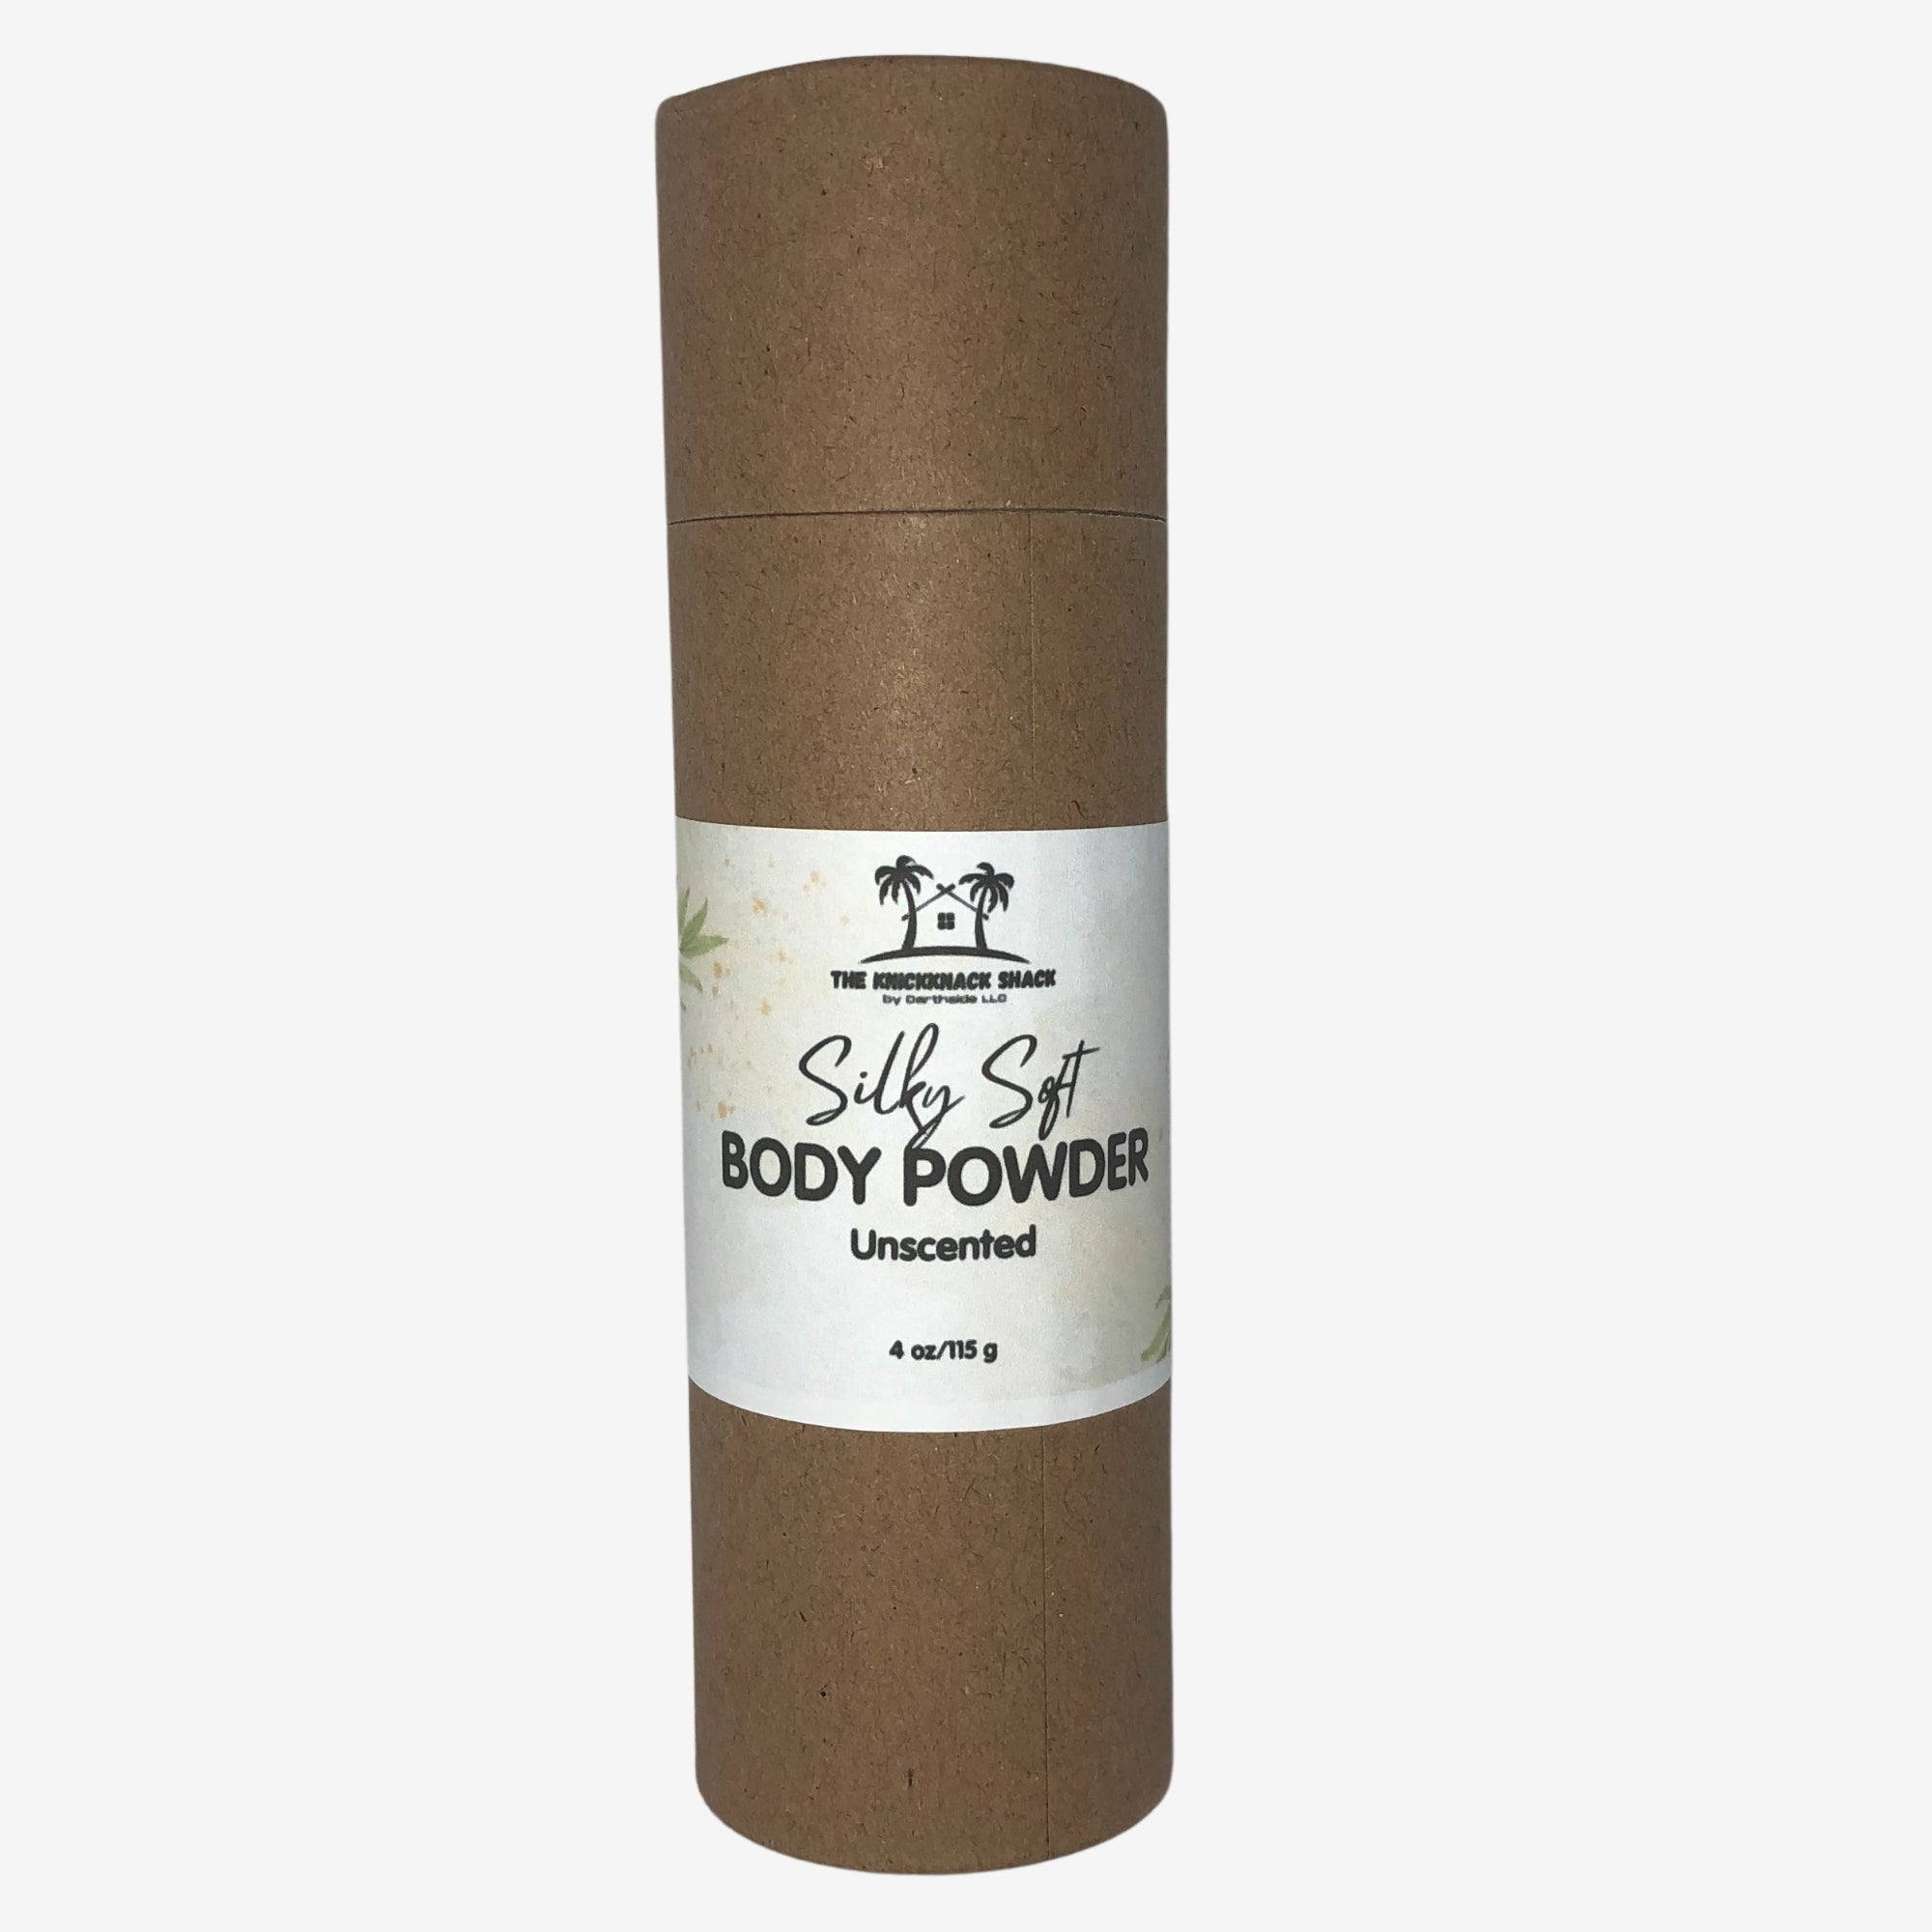 Silky Soft Body Powder - Unscented